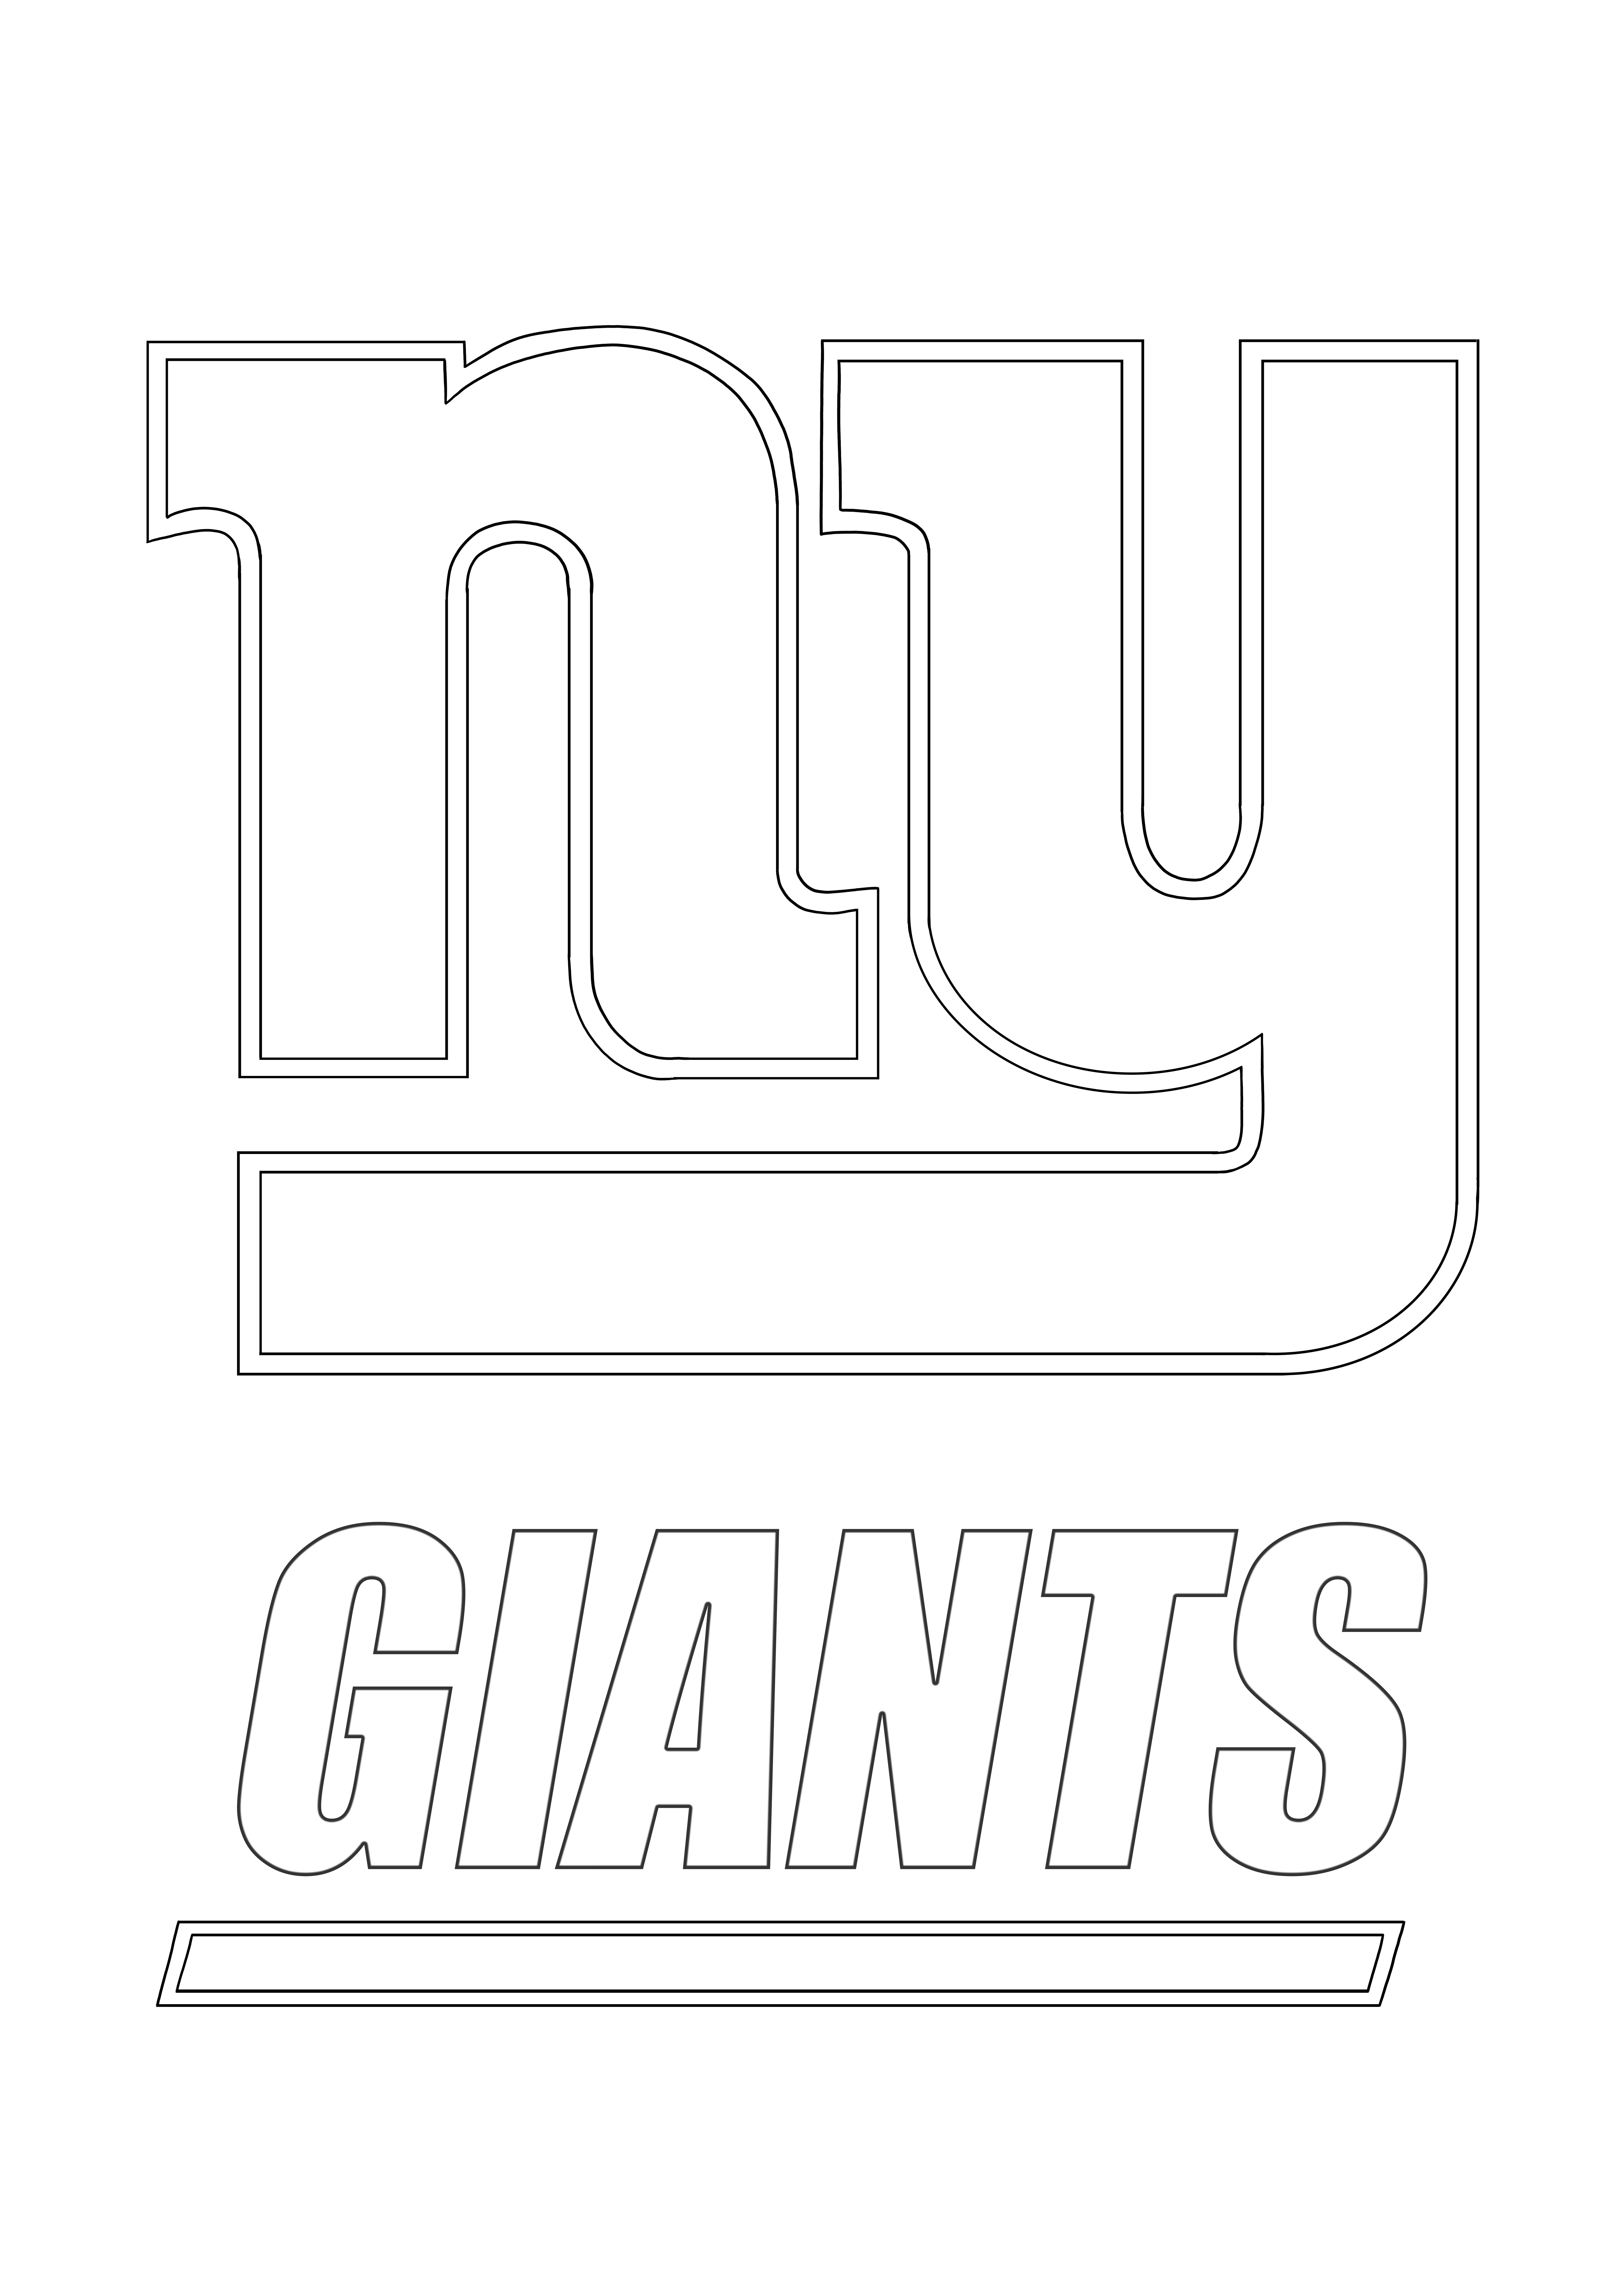 Favorite New York Giants Logo free coloring and free printable sheet